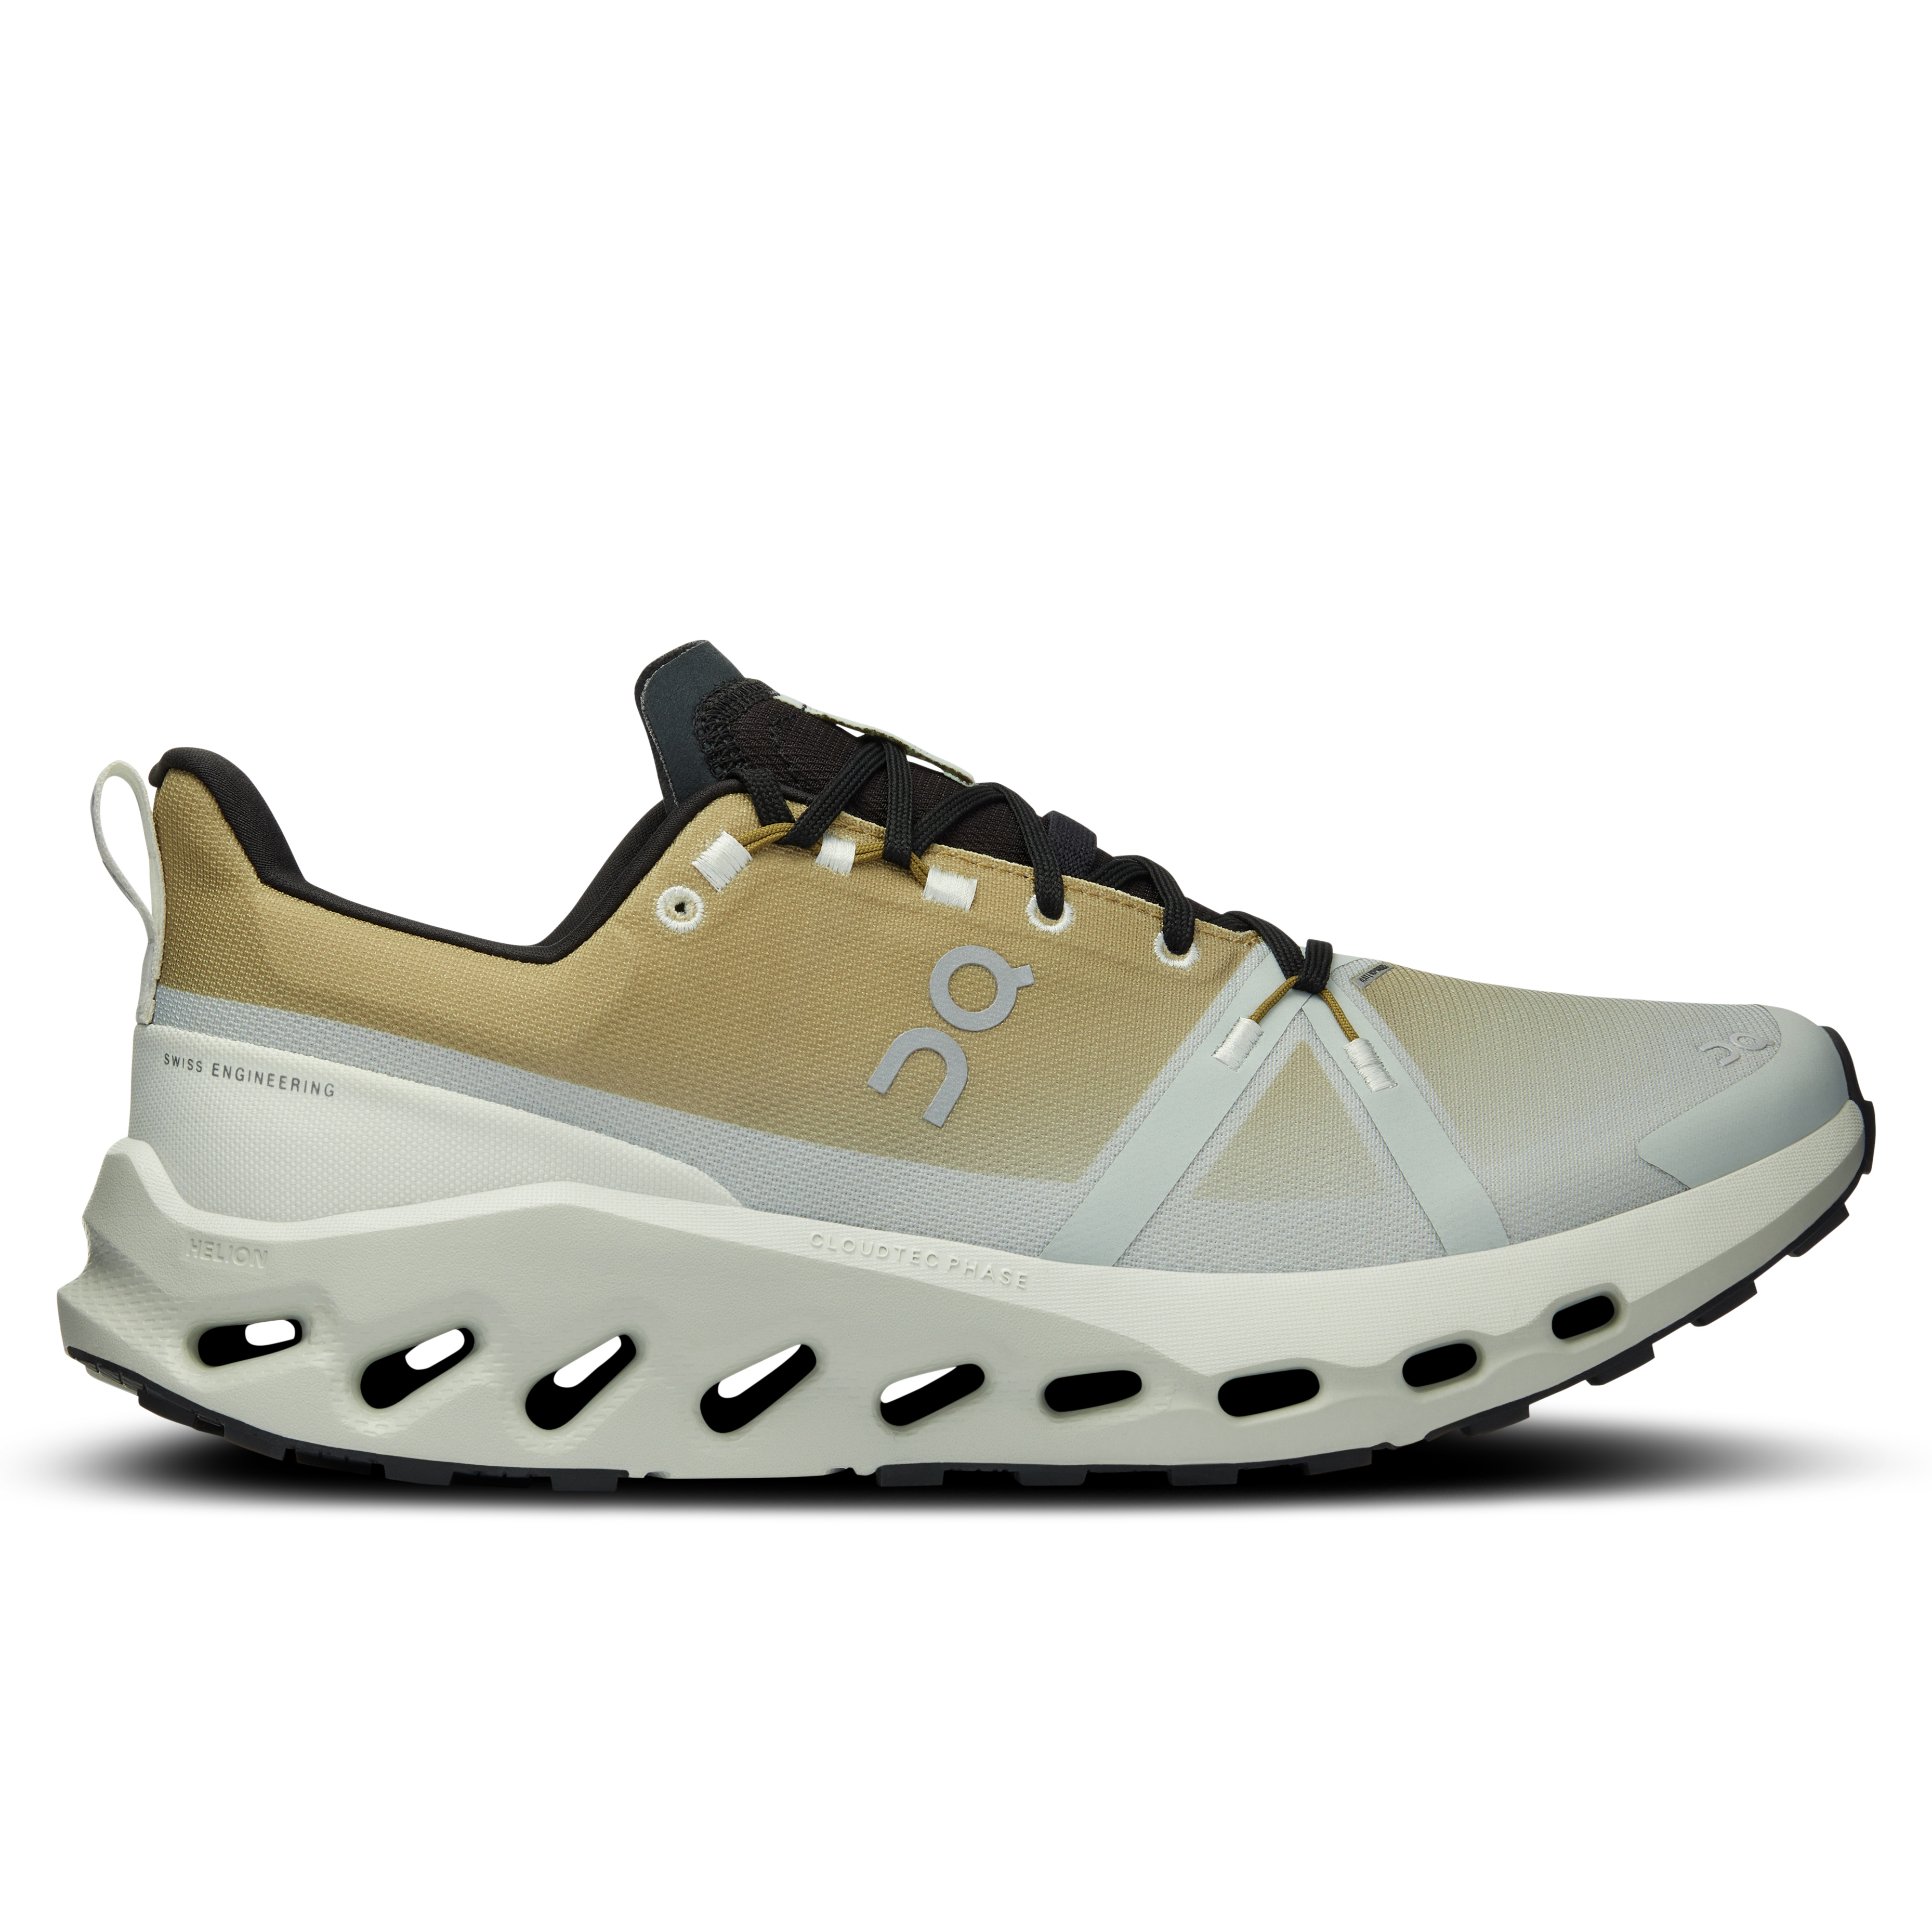 Cloudsurfer Trail Waterproof Running Sneaker